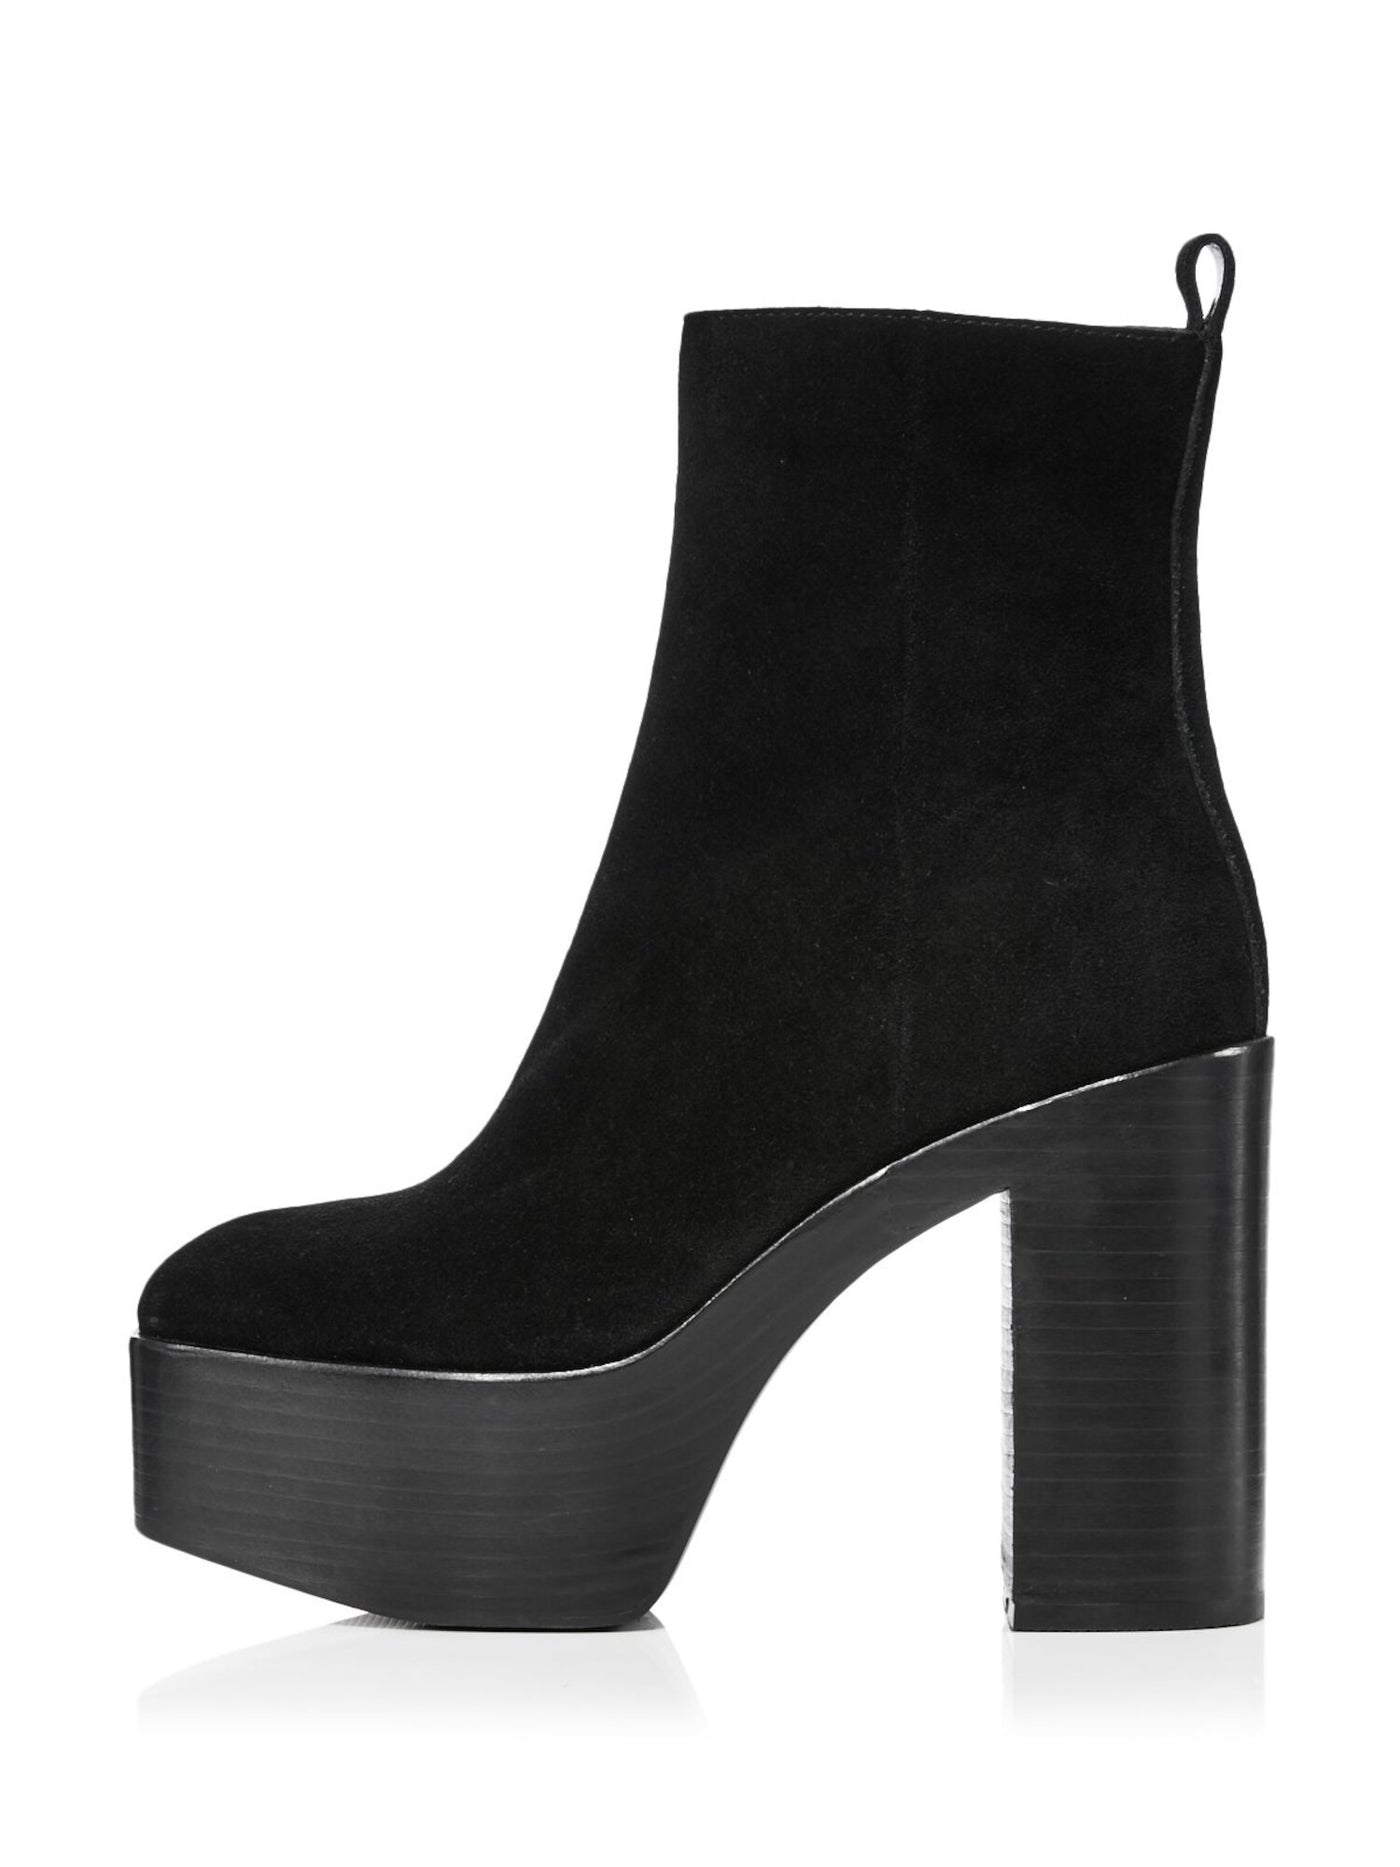 AQUA Womens Black 2" Platform Comfort Maya Square Toe Stacked Heel Zip-Up Leather Booties 8 M